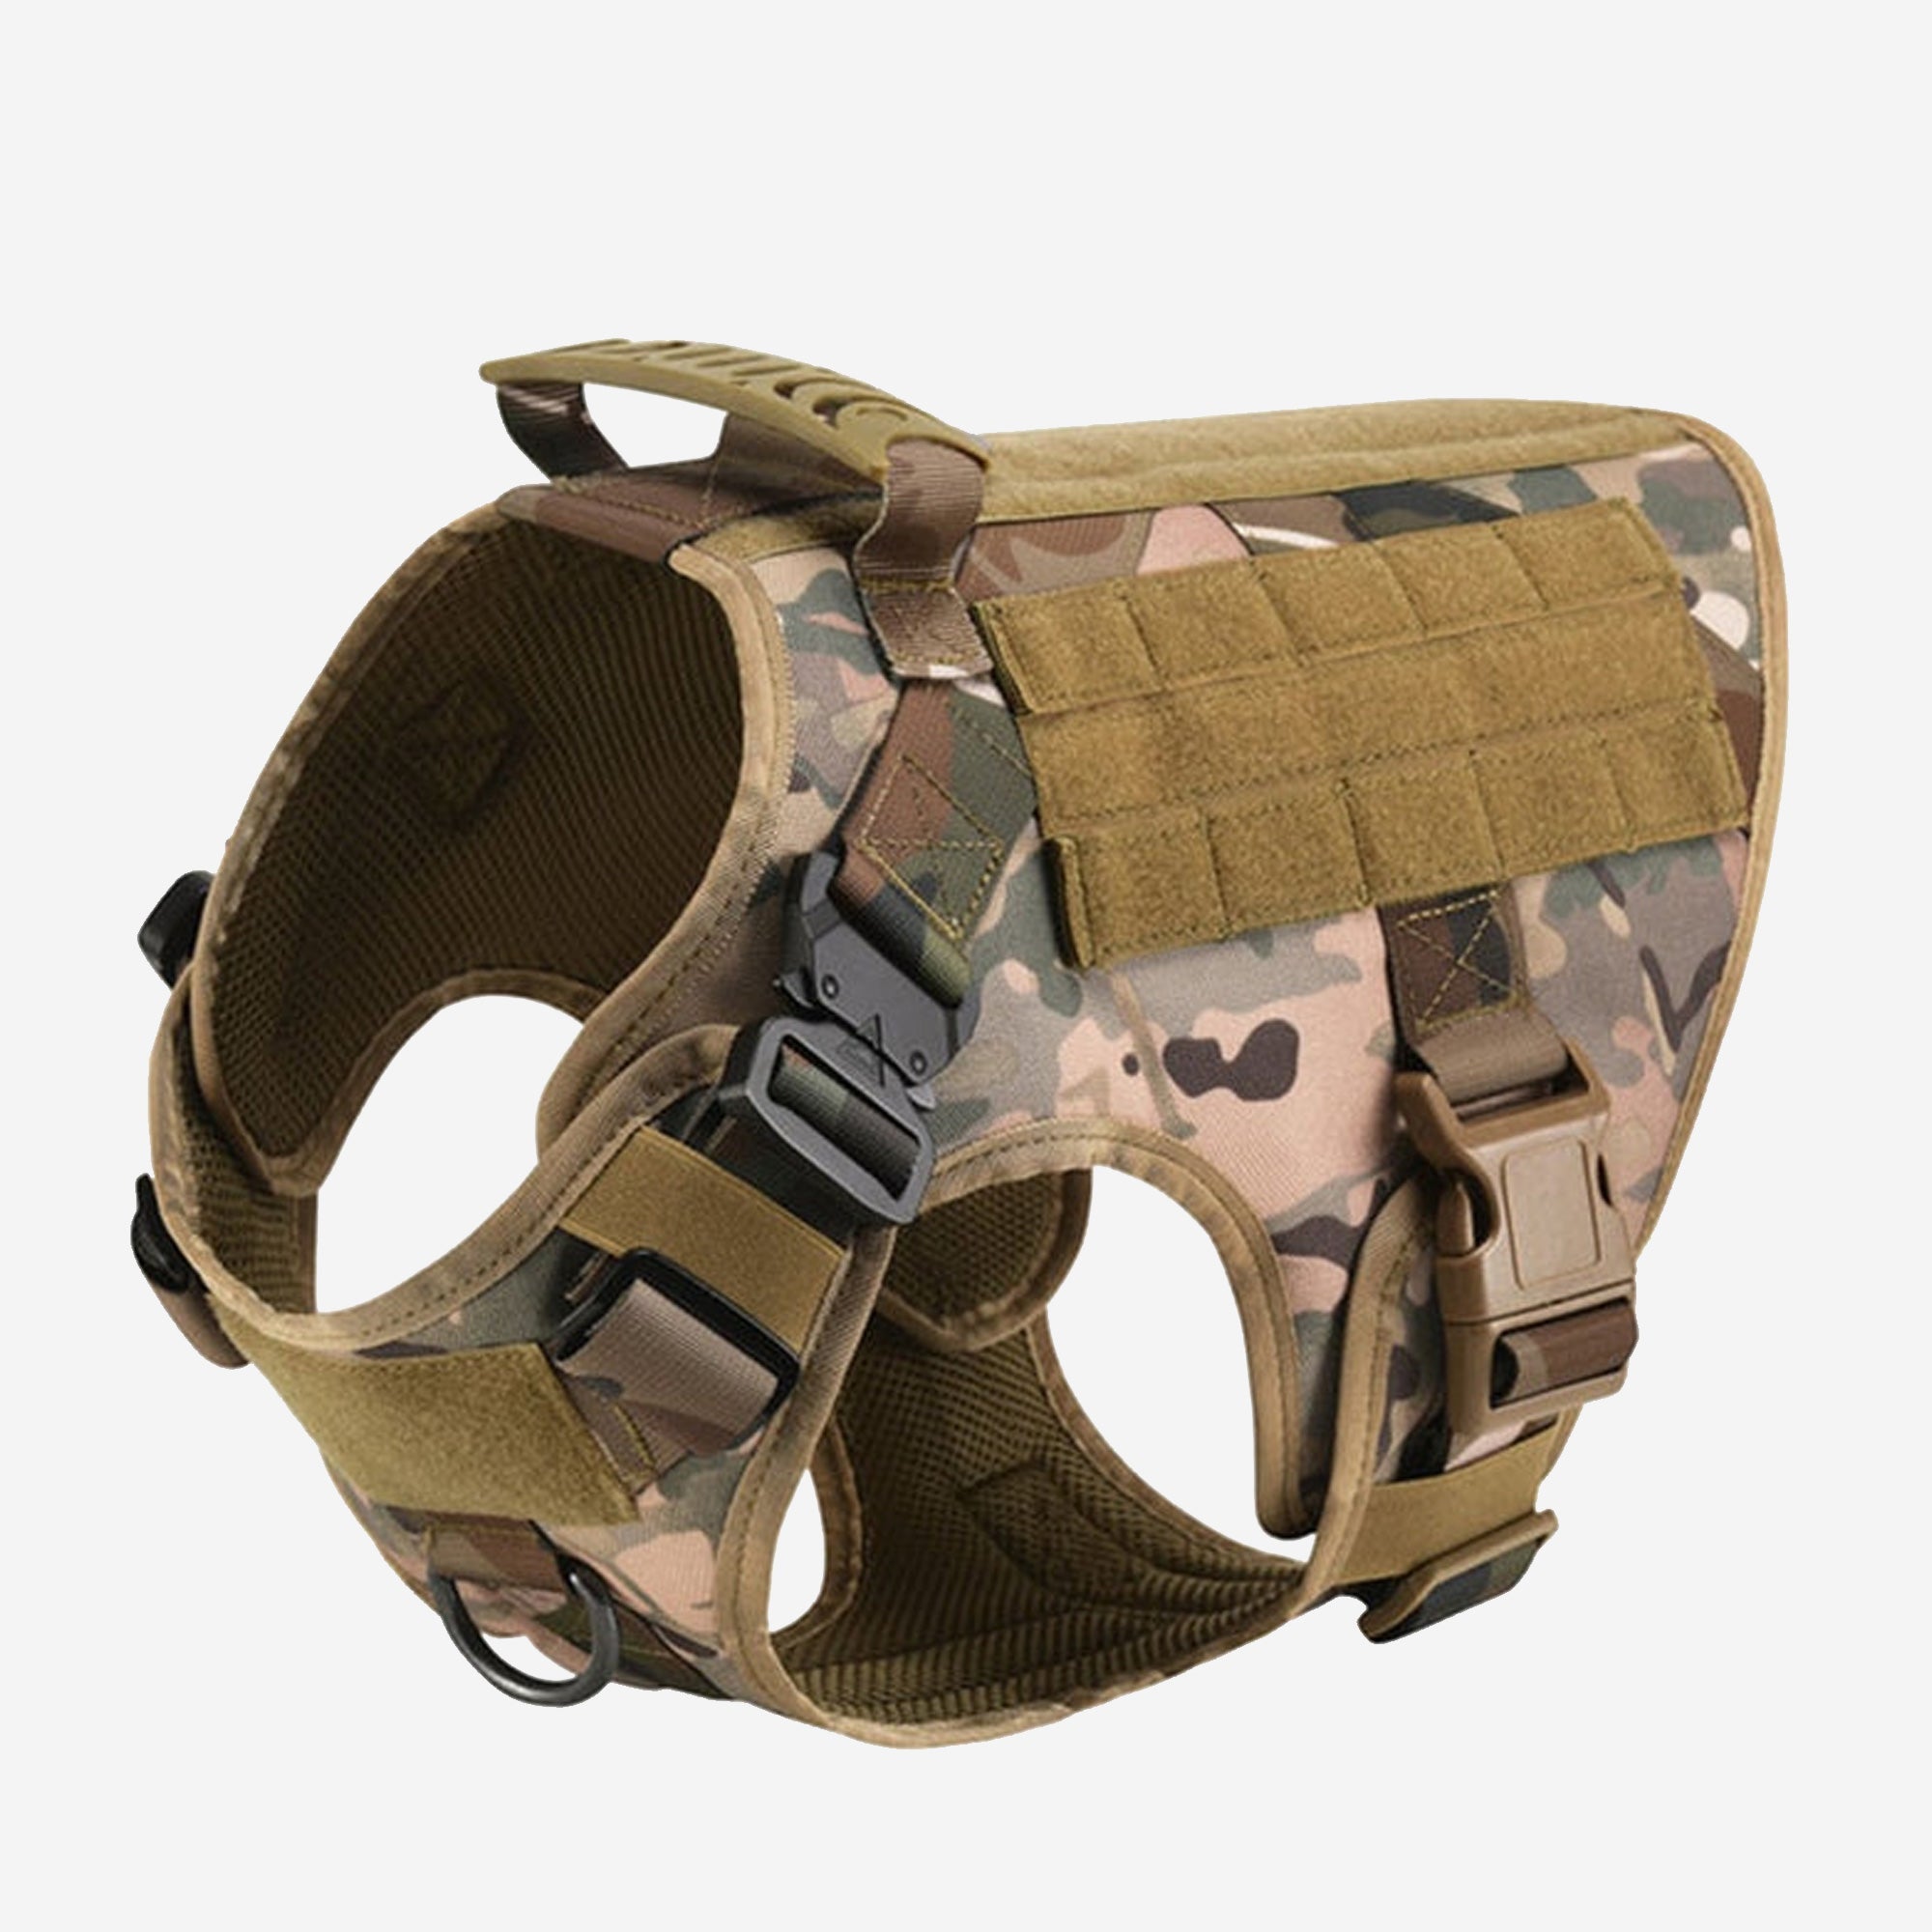 Pupwonders | K9 Heavy-Duty Tactical No-Pull Dog Harness